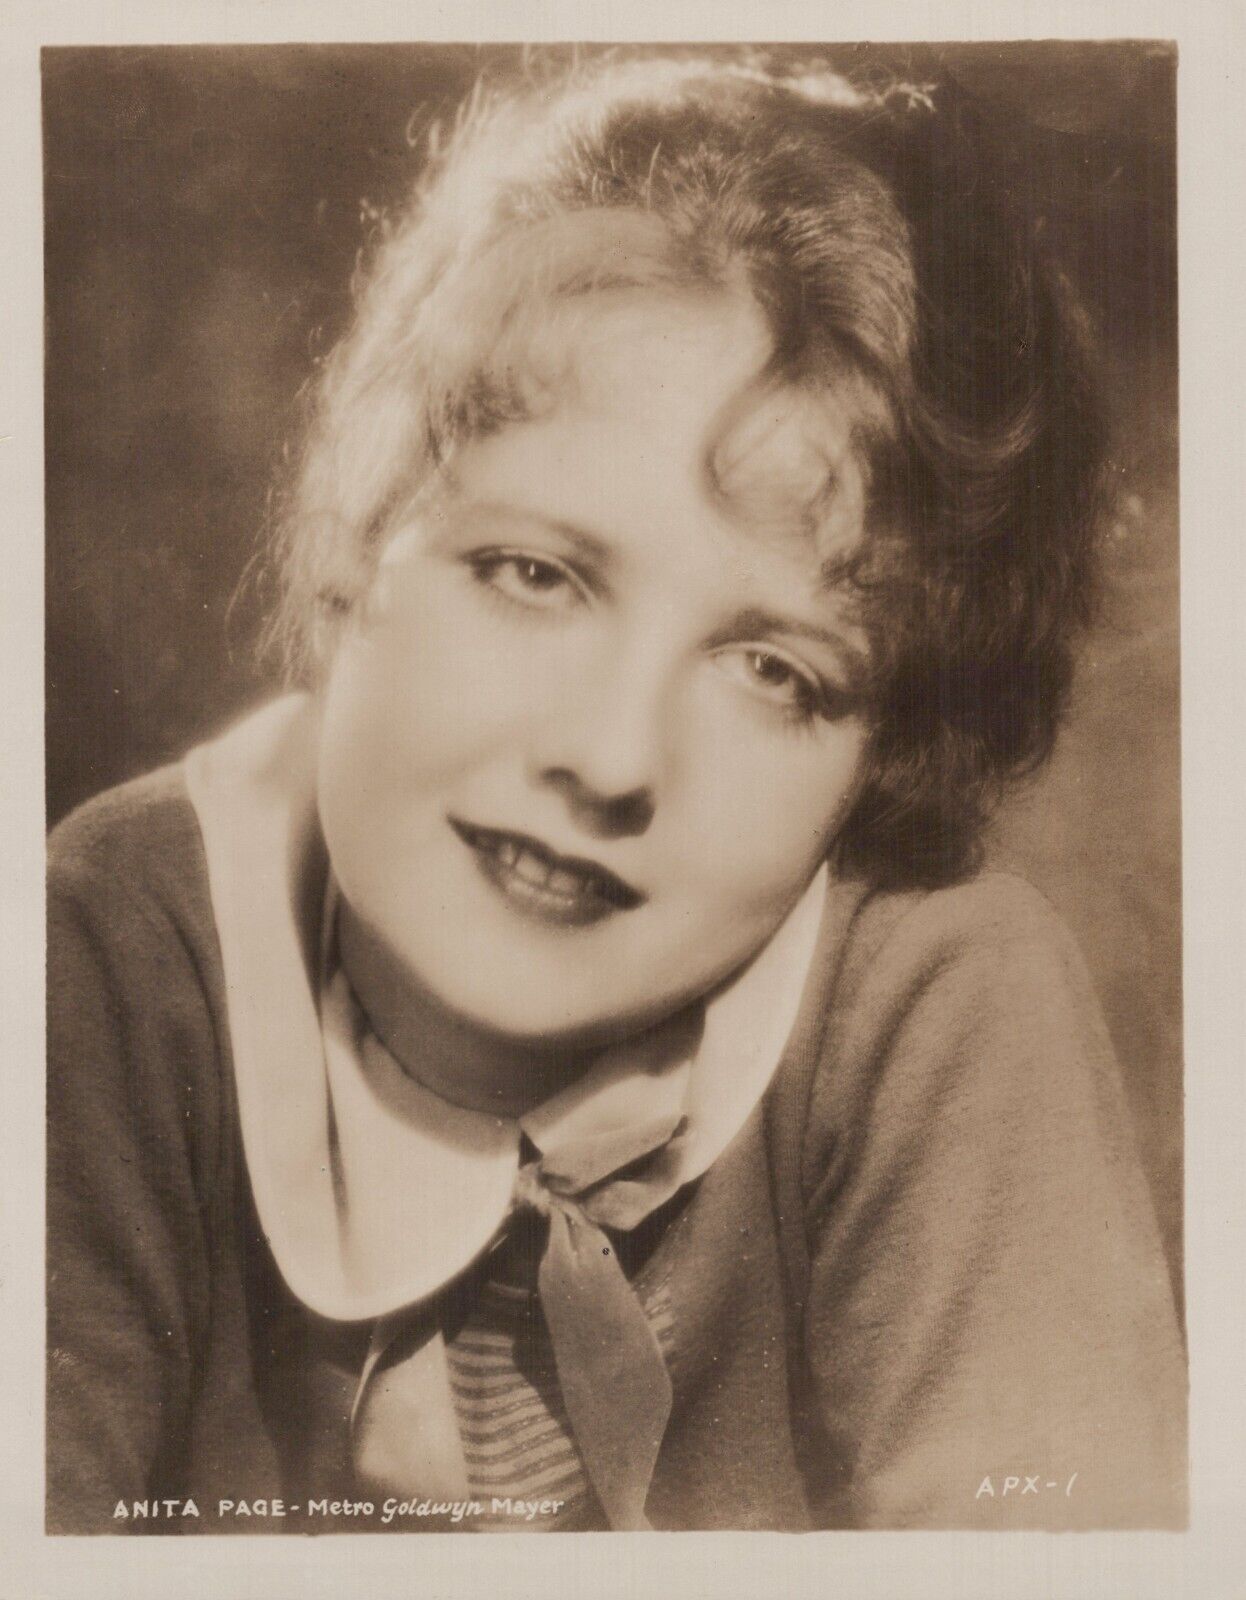 Anita Page (1930s) ❤🎬 Beauty Hollywood Actress - Stunning Portrait Photo K 166